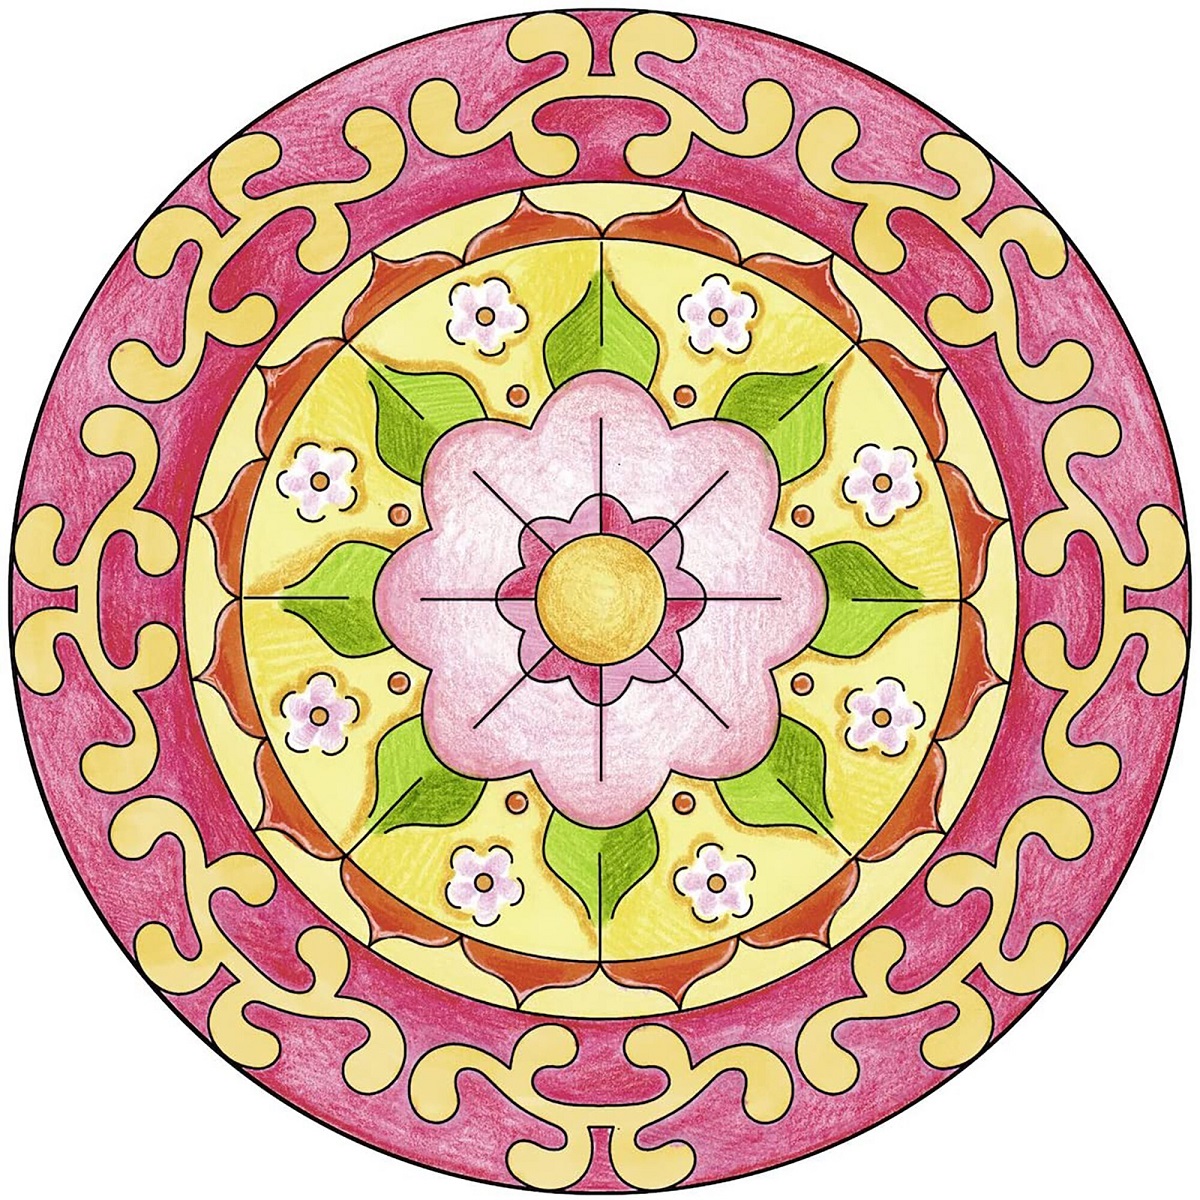 Set de creatie: Mandala romantic